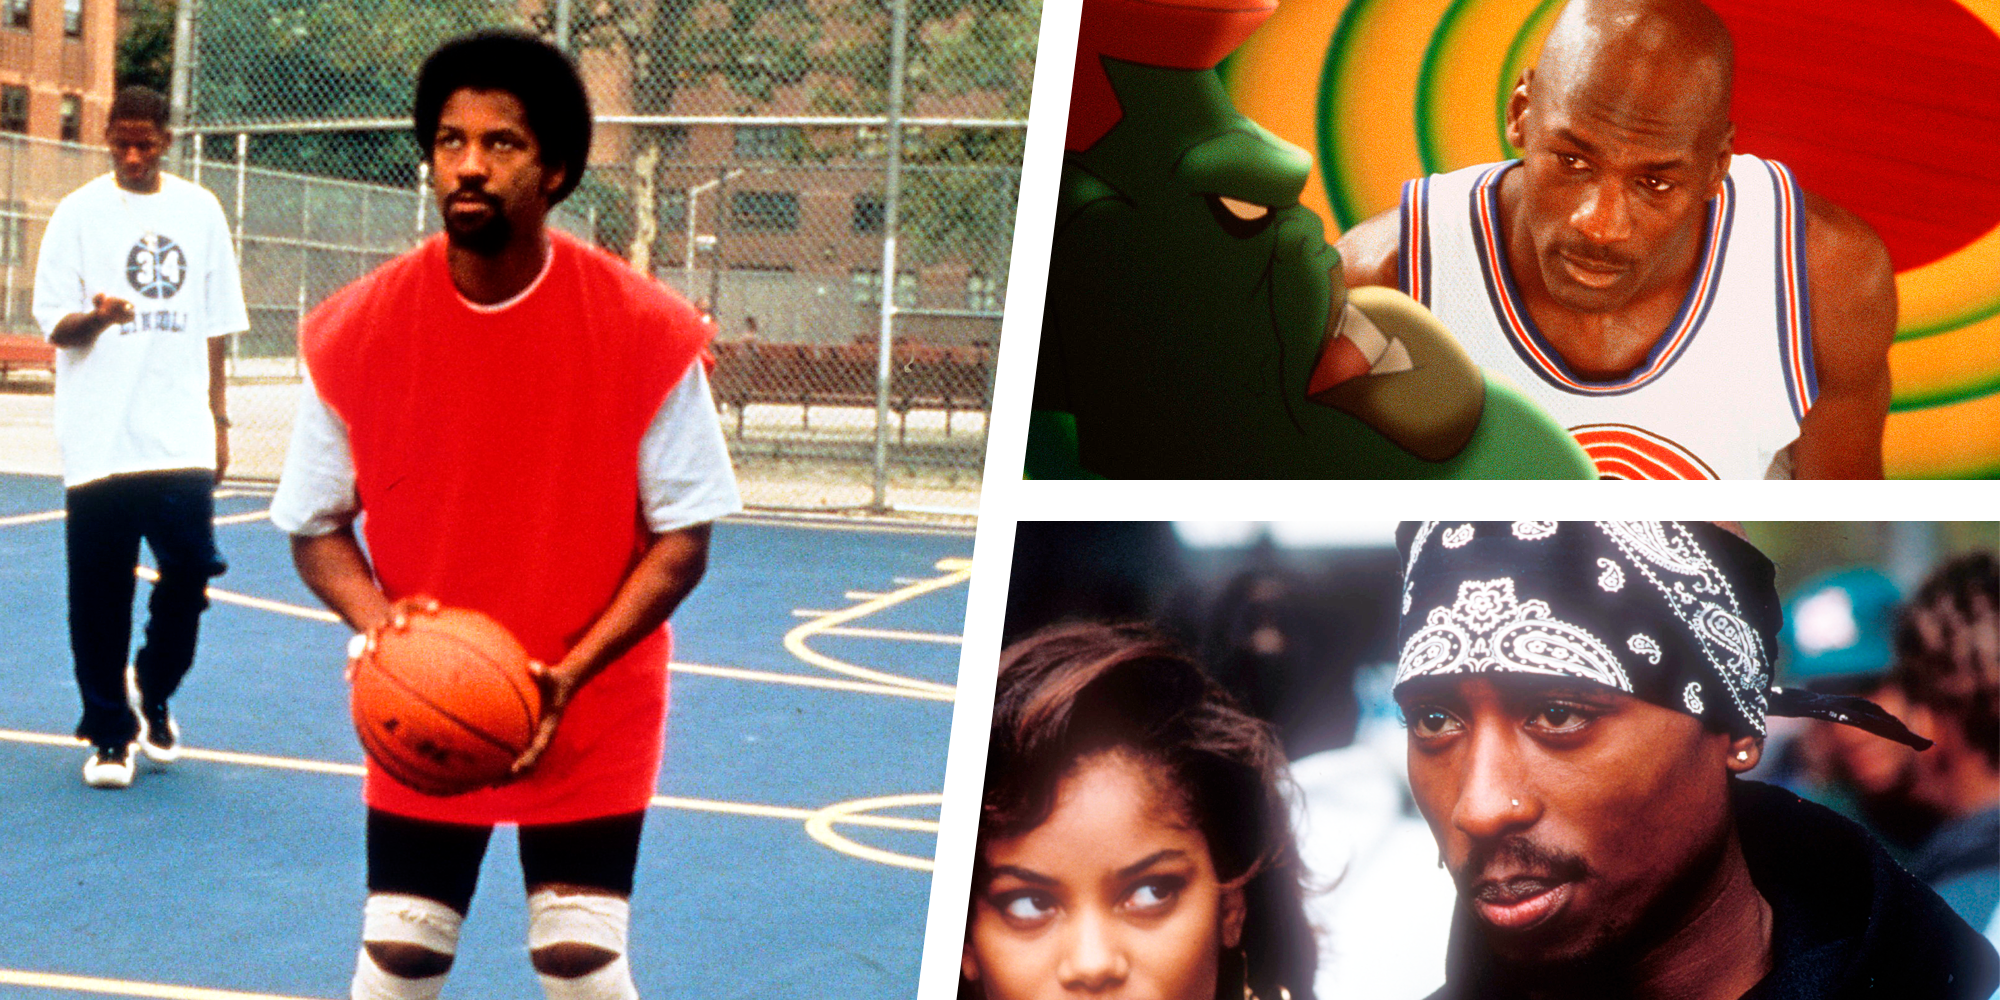 Top 5 Basketball Movies, Based on Choreography